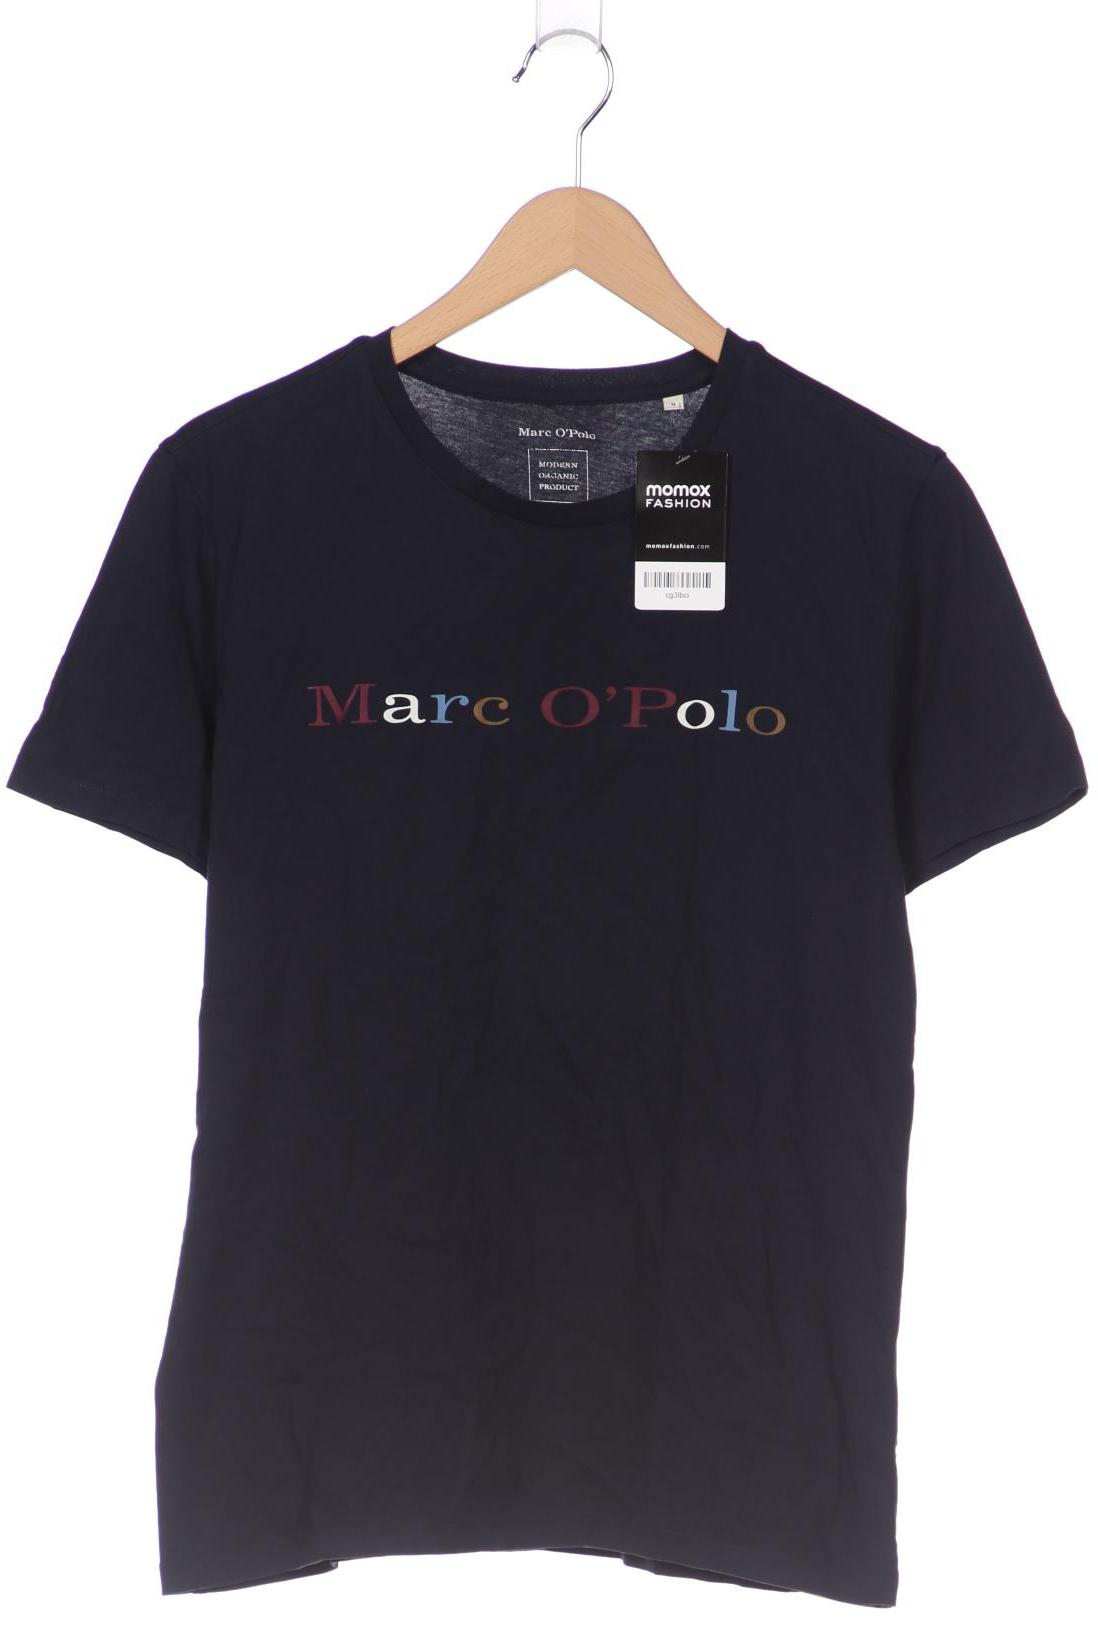 Marc O Polo Herren T-Shirt, marineblau, Gr. 48 von Marc O Polo